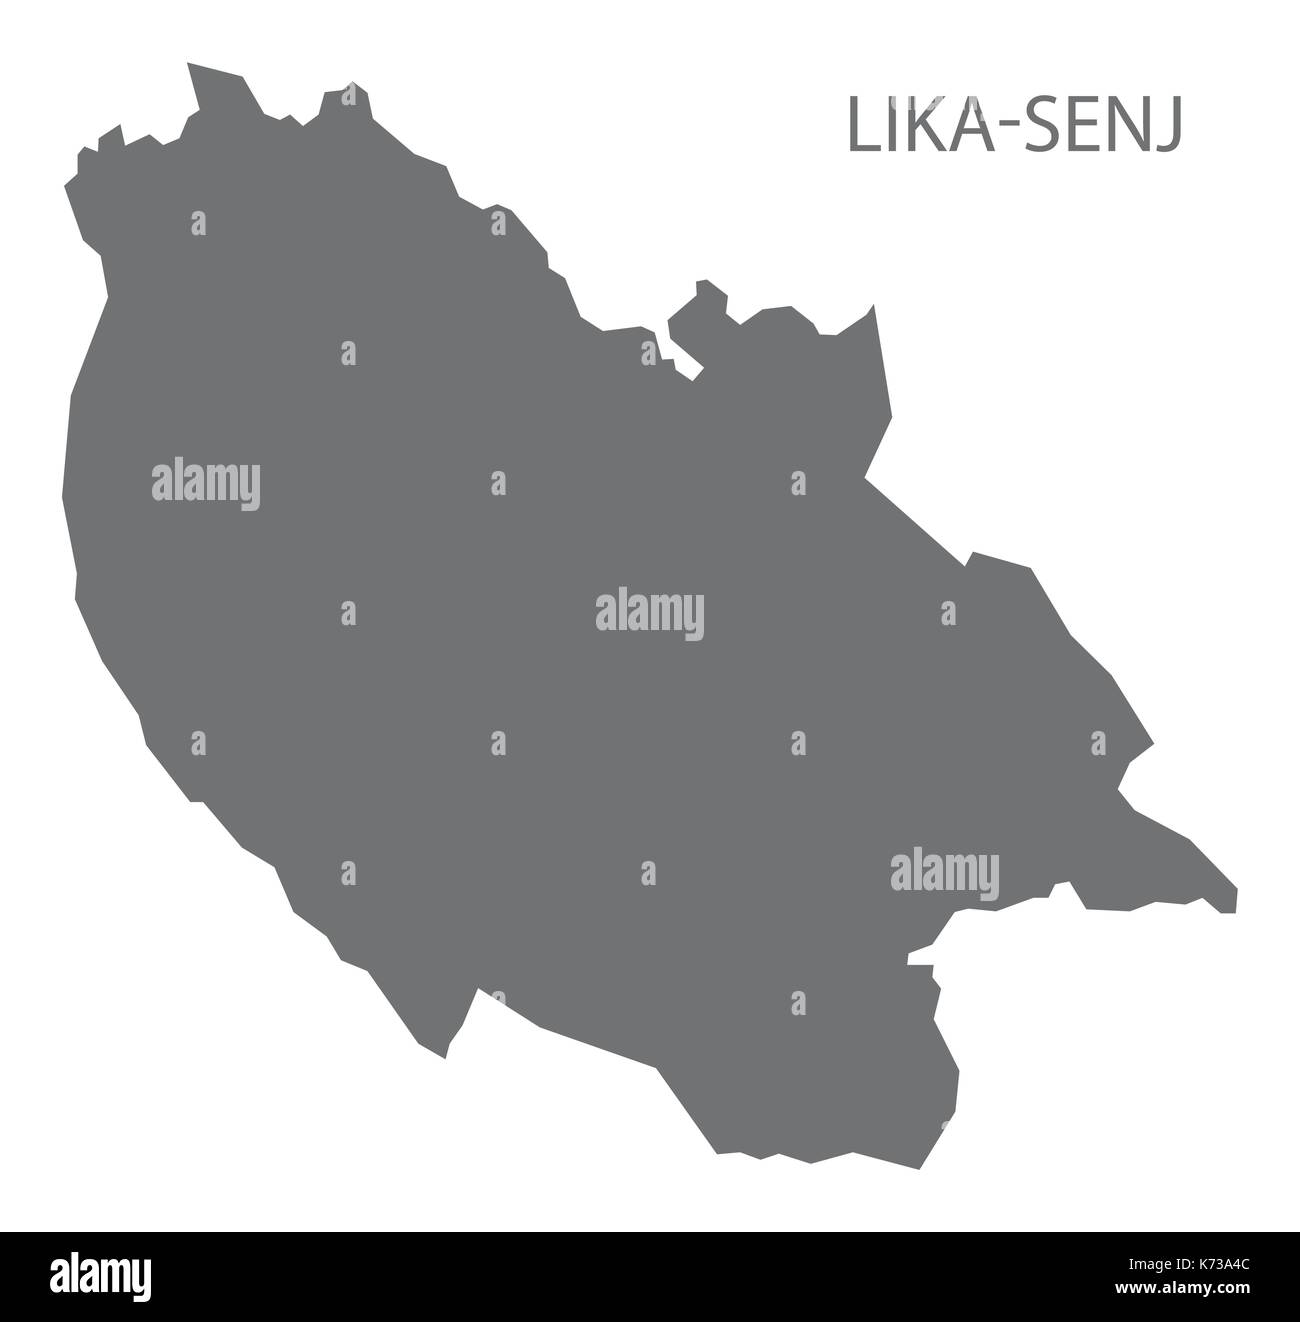 Lika-Senj Croatia county map grey illustration silhouette shape Stock Vector